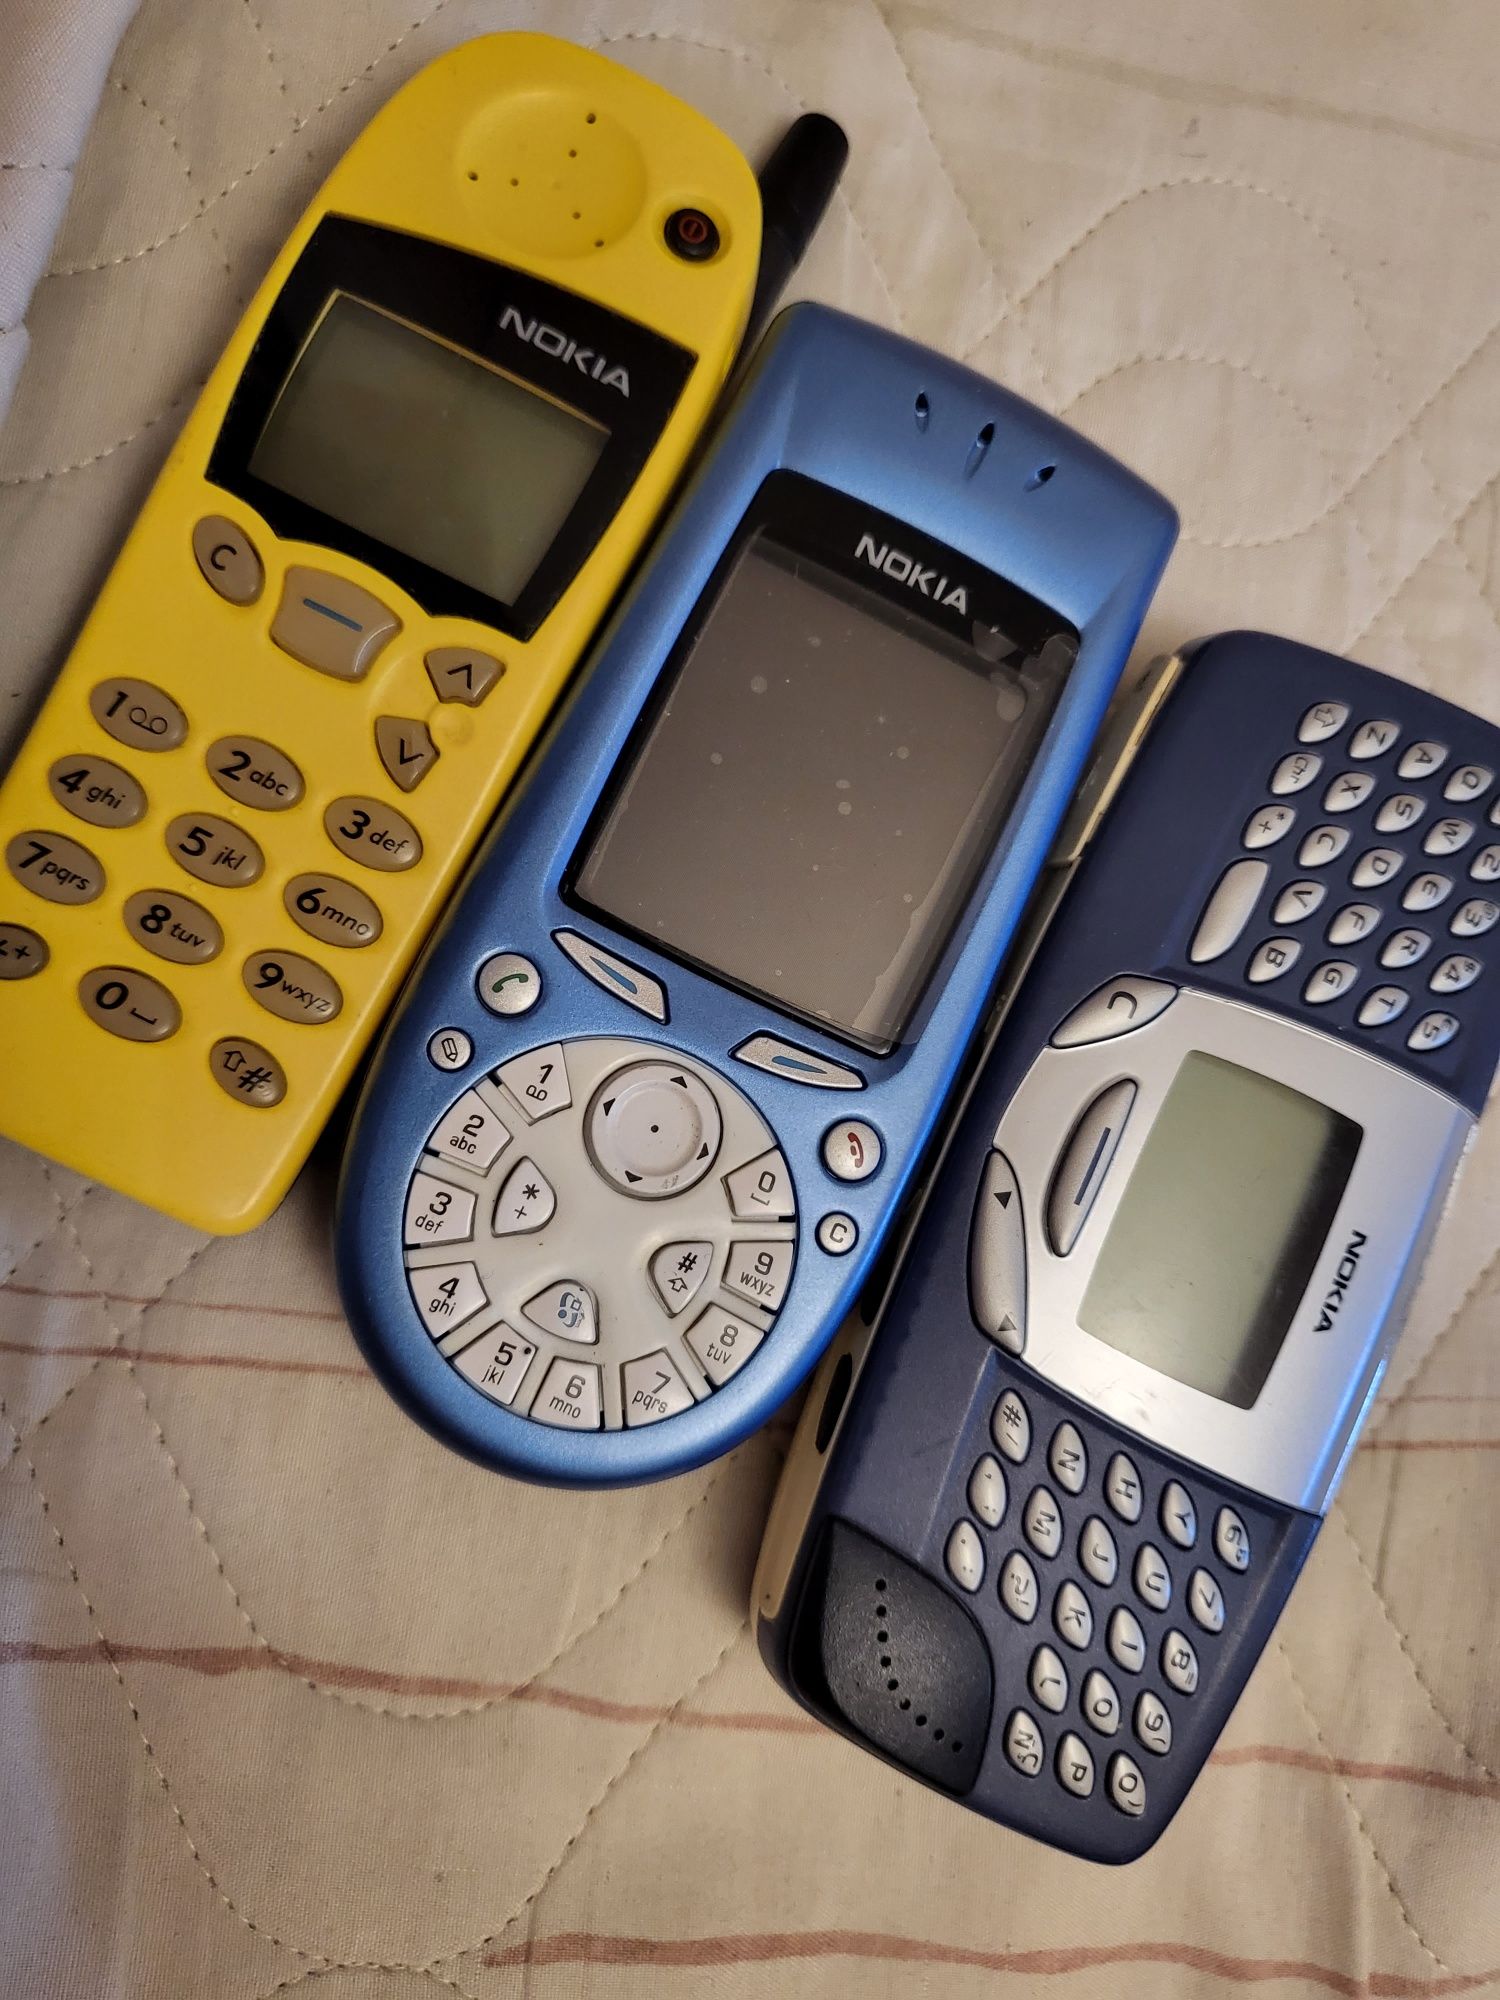 Нокия/Nokia E61,E60,8250,E7,N95,7110,5730,6700,5100,7210,N73,3650,E75